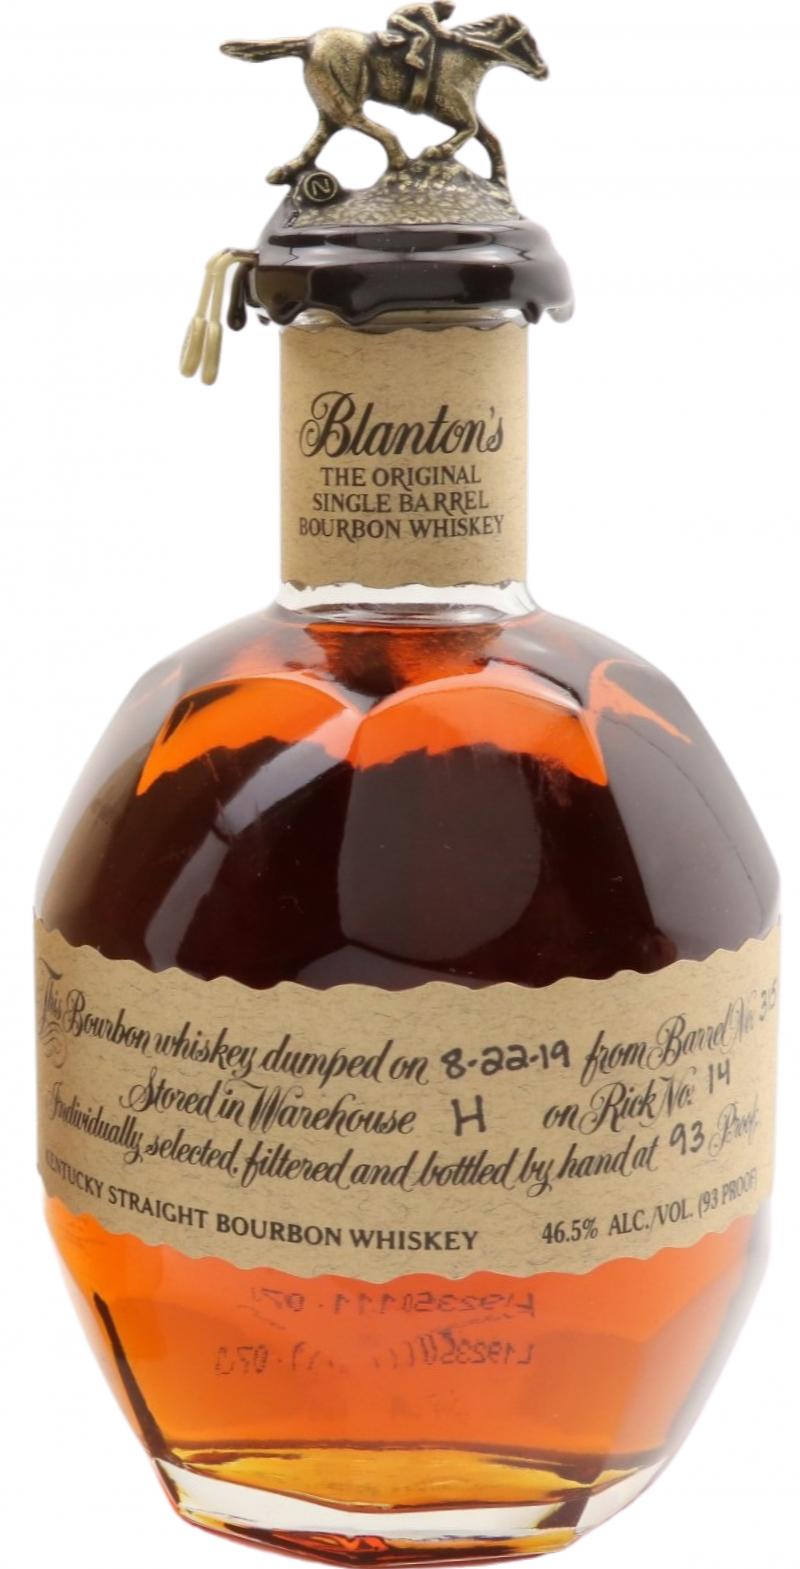 Blanton's The Original Single Barrel Bourbon Whisky #315 46.5% 700ml